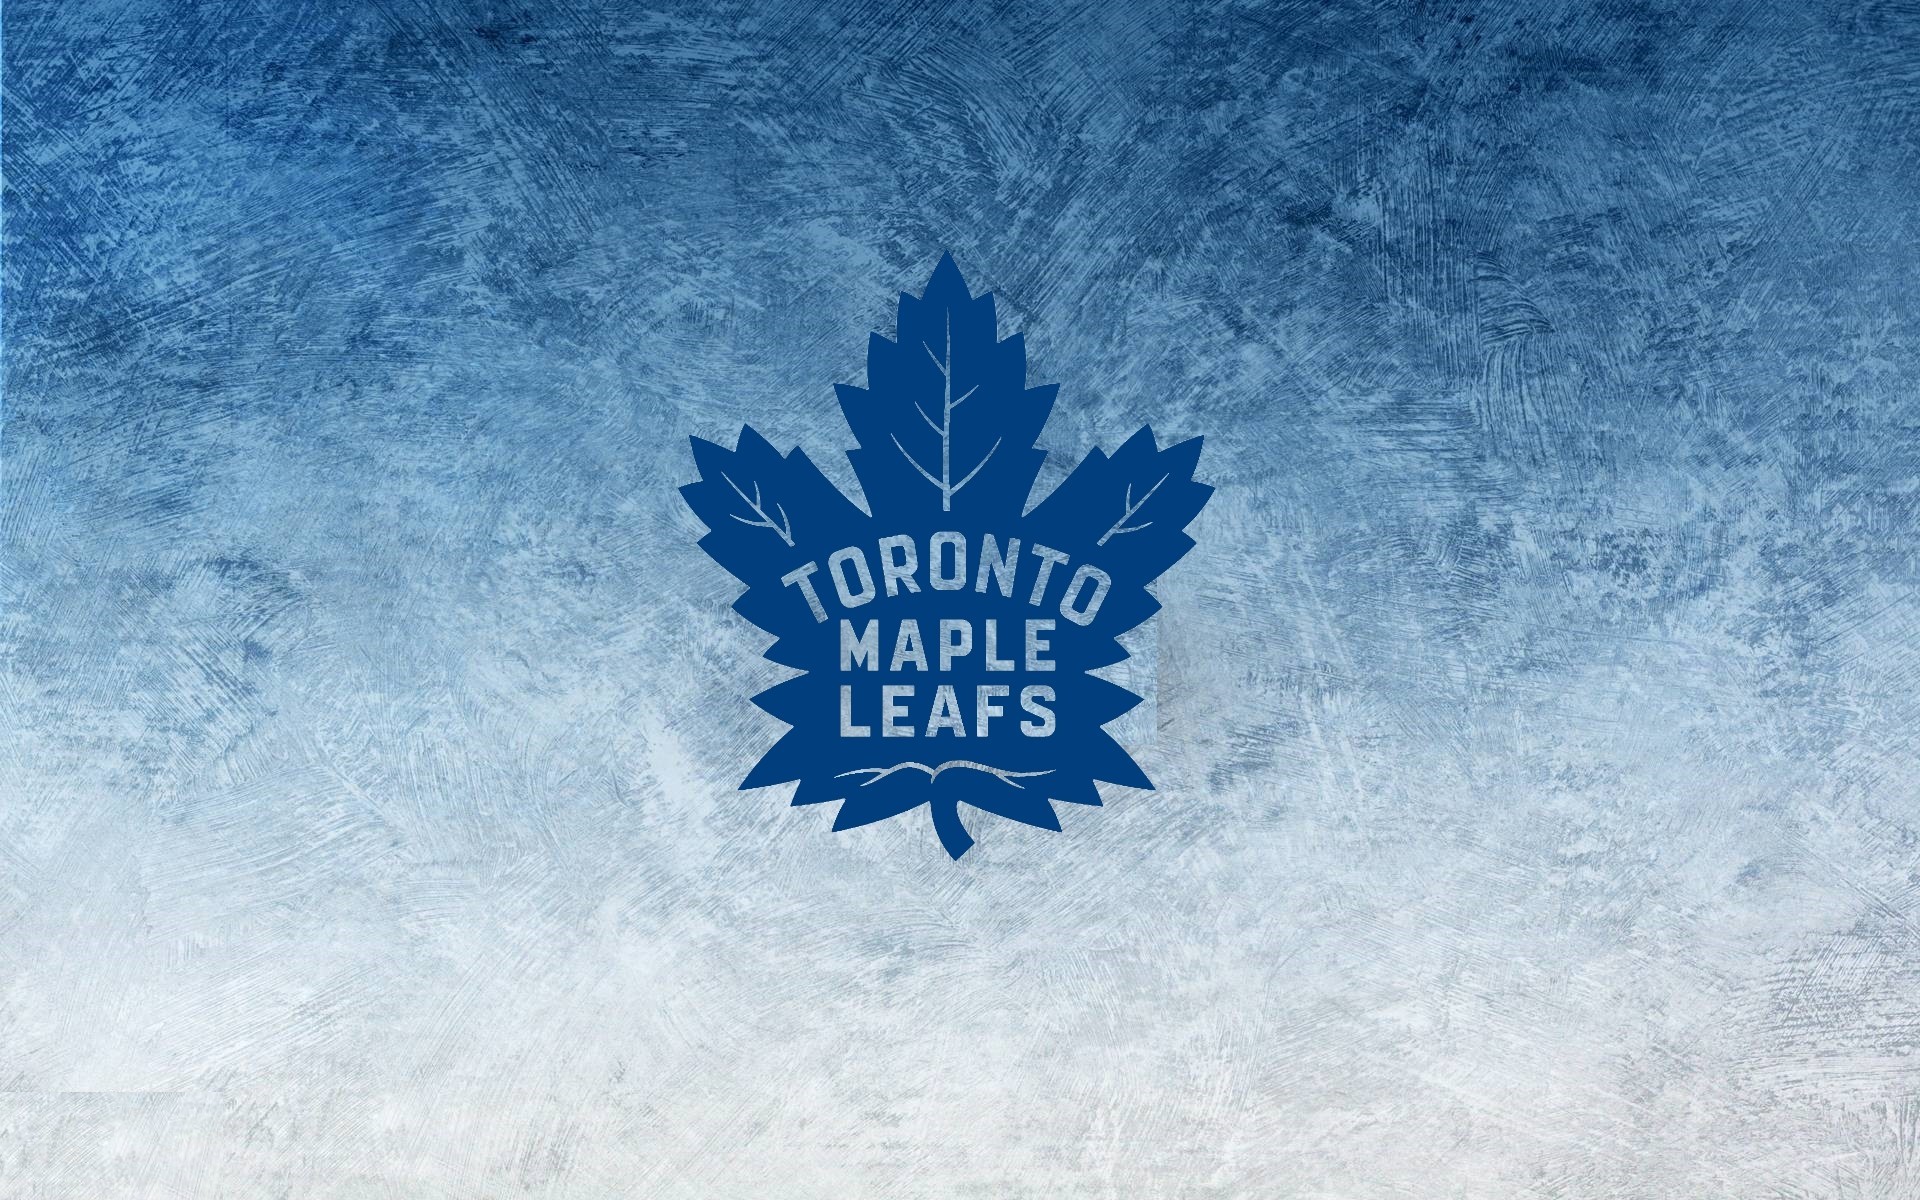 Toronto Maple Leafs Wallpaper 2018 (63+